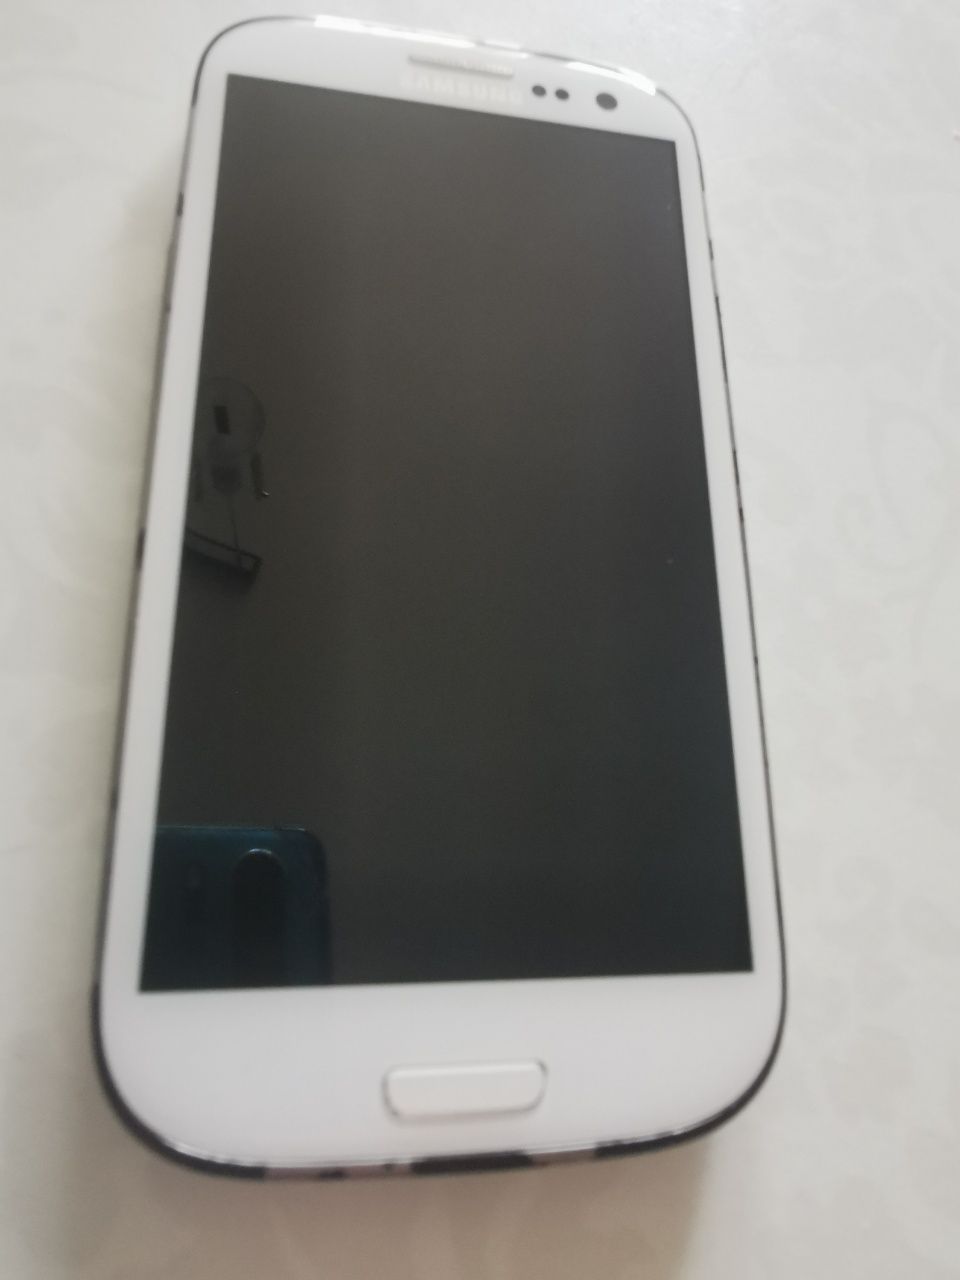 Samsung S3 Gt-i9300